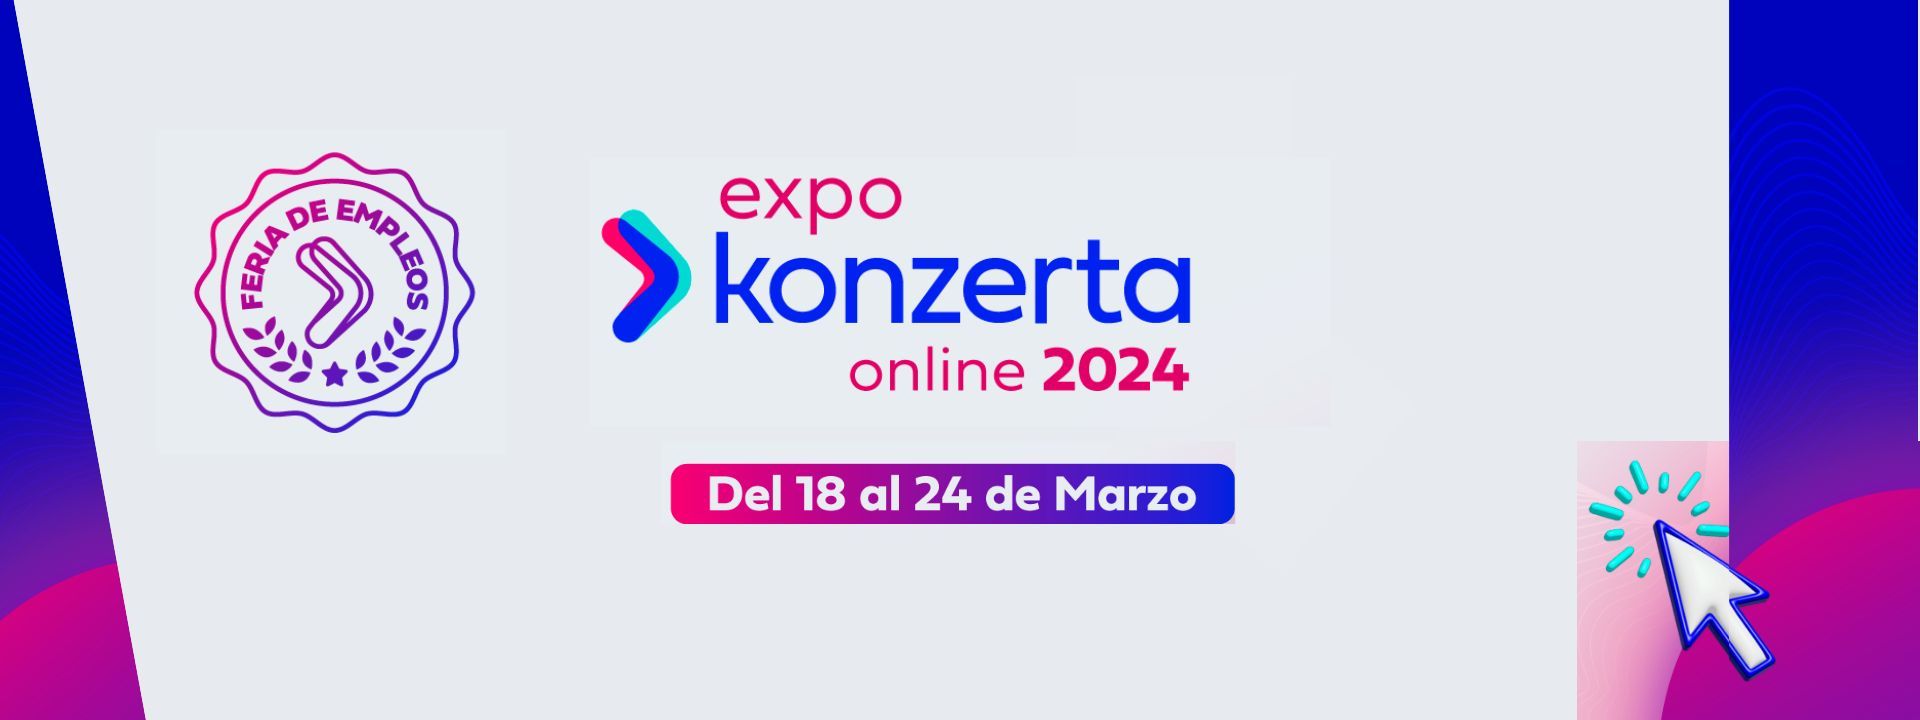 Ya llega Expo Konzerta Online 2024